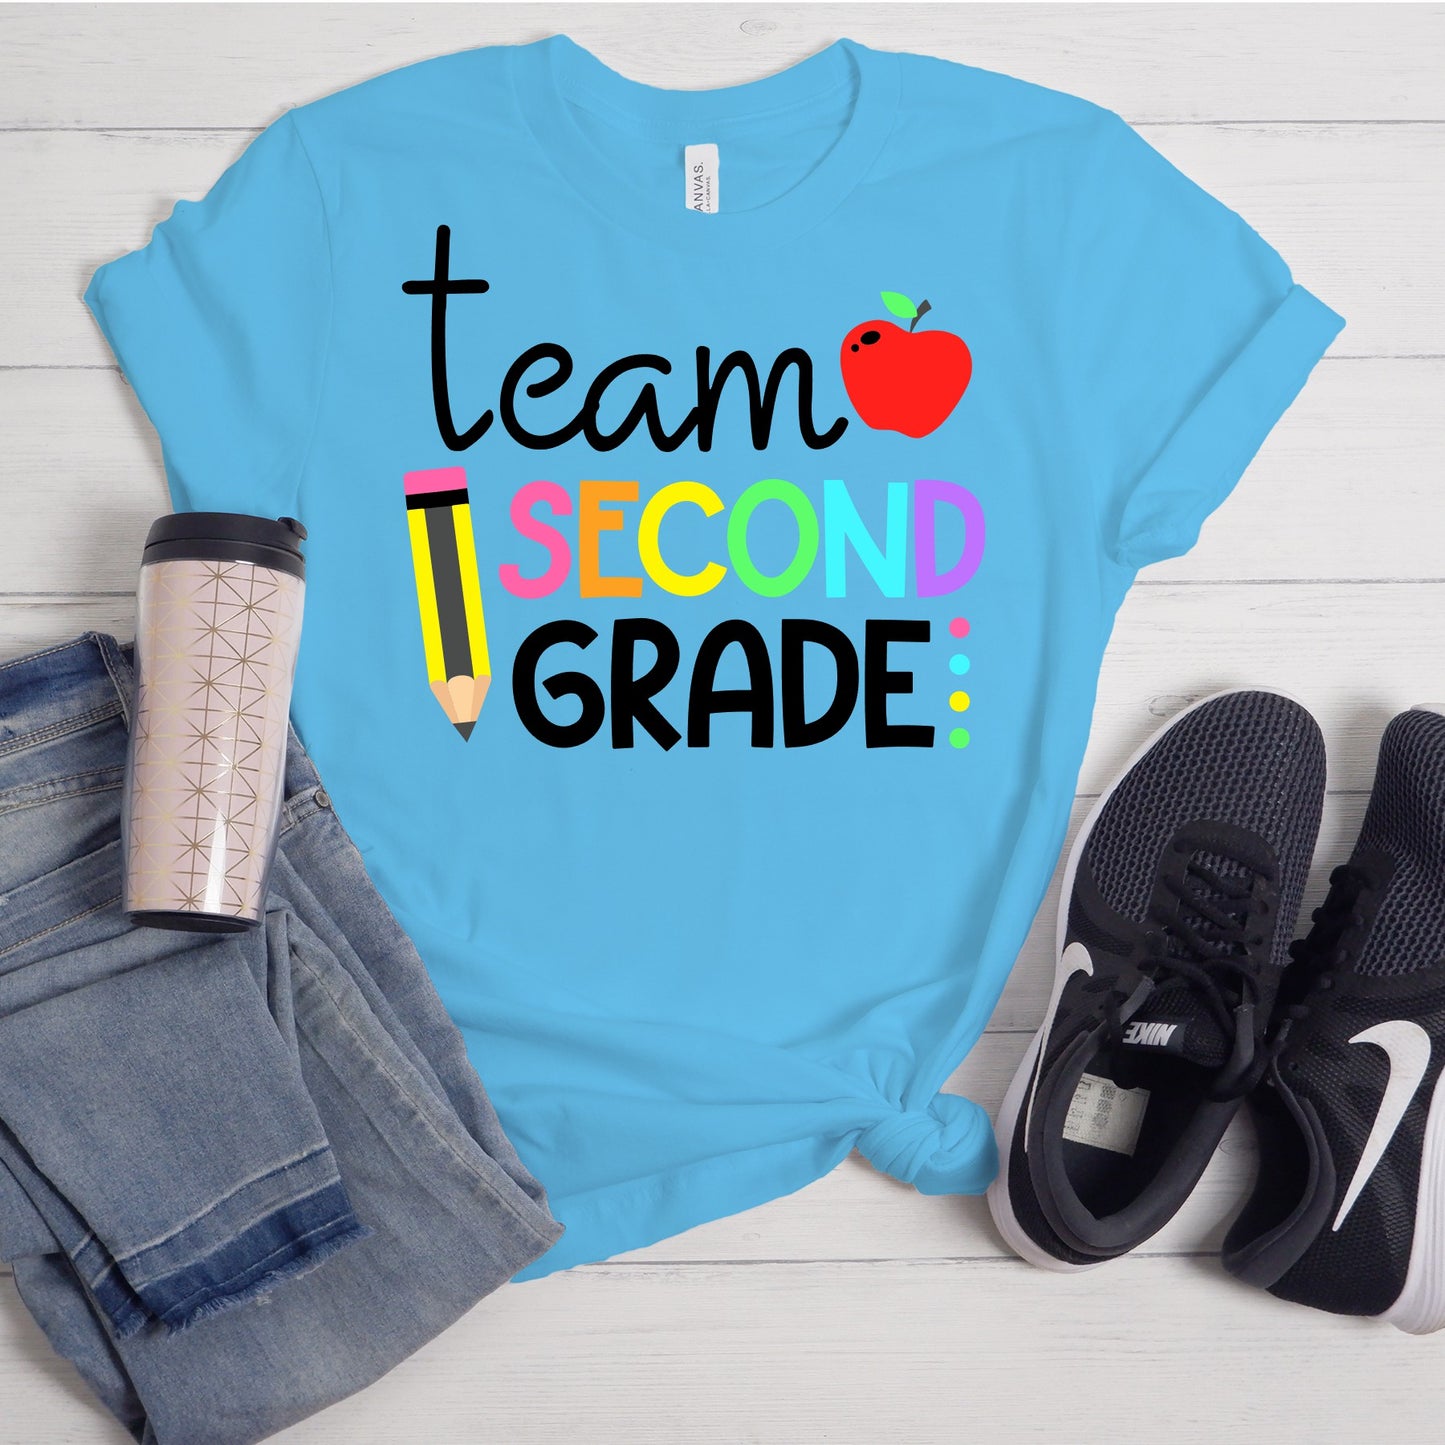 Team Grade Level T-Shirt